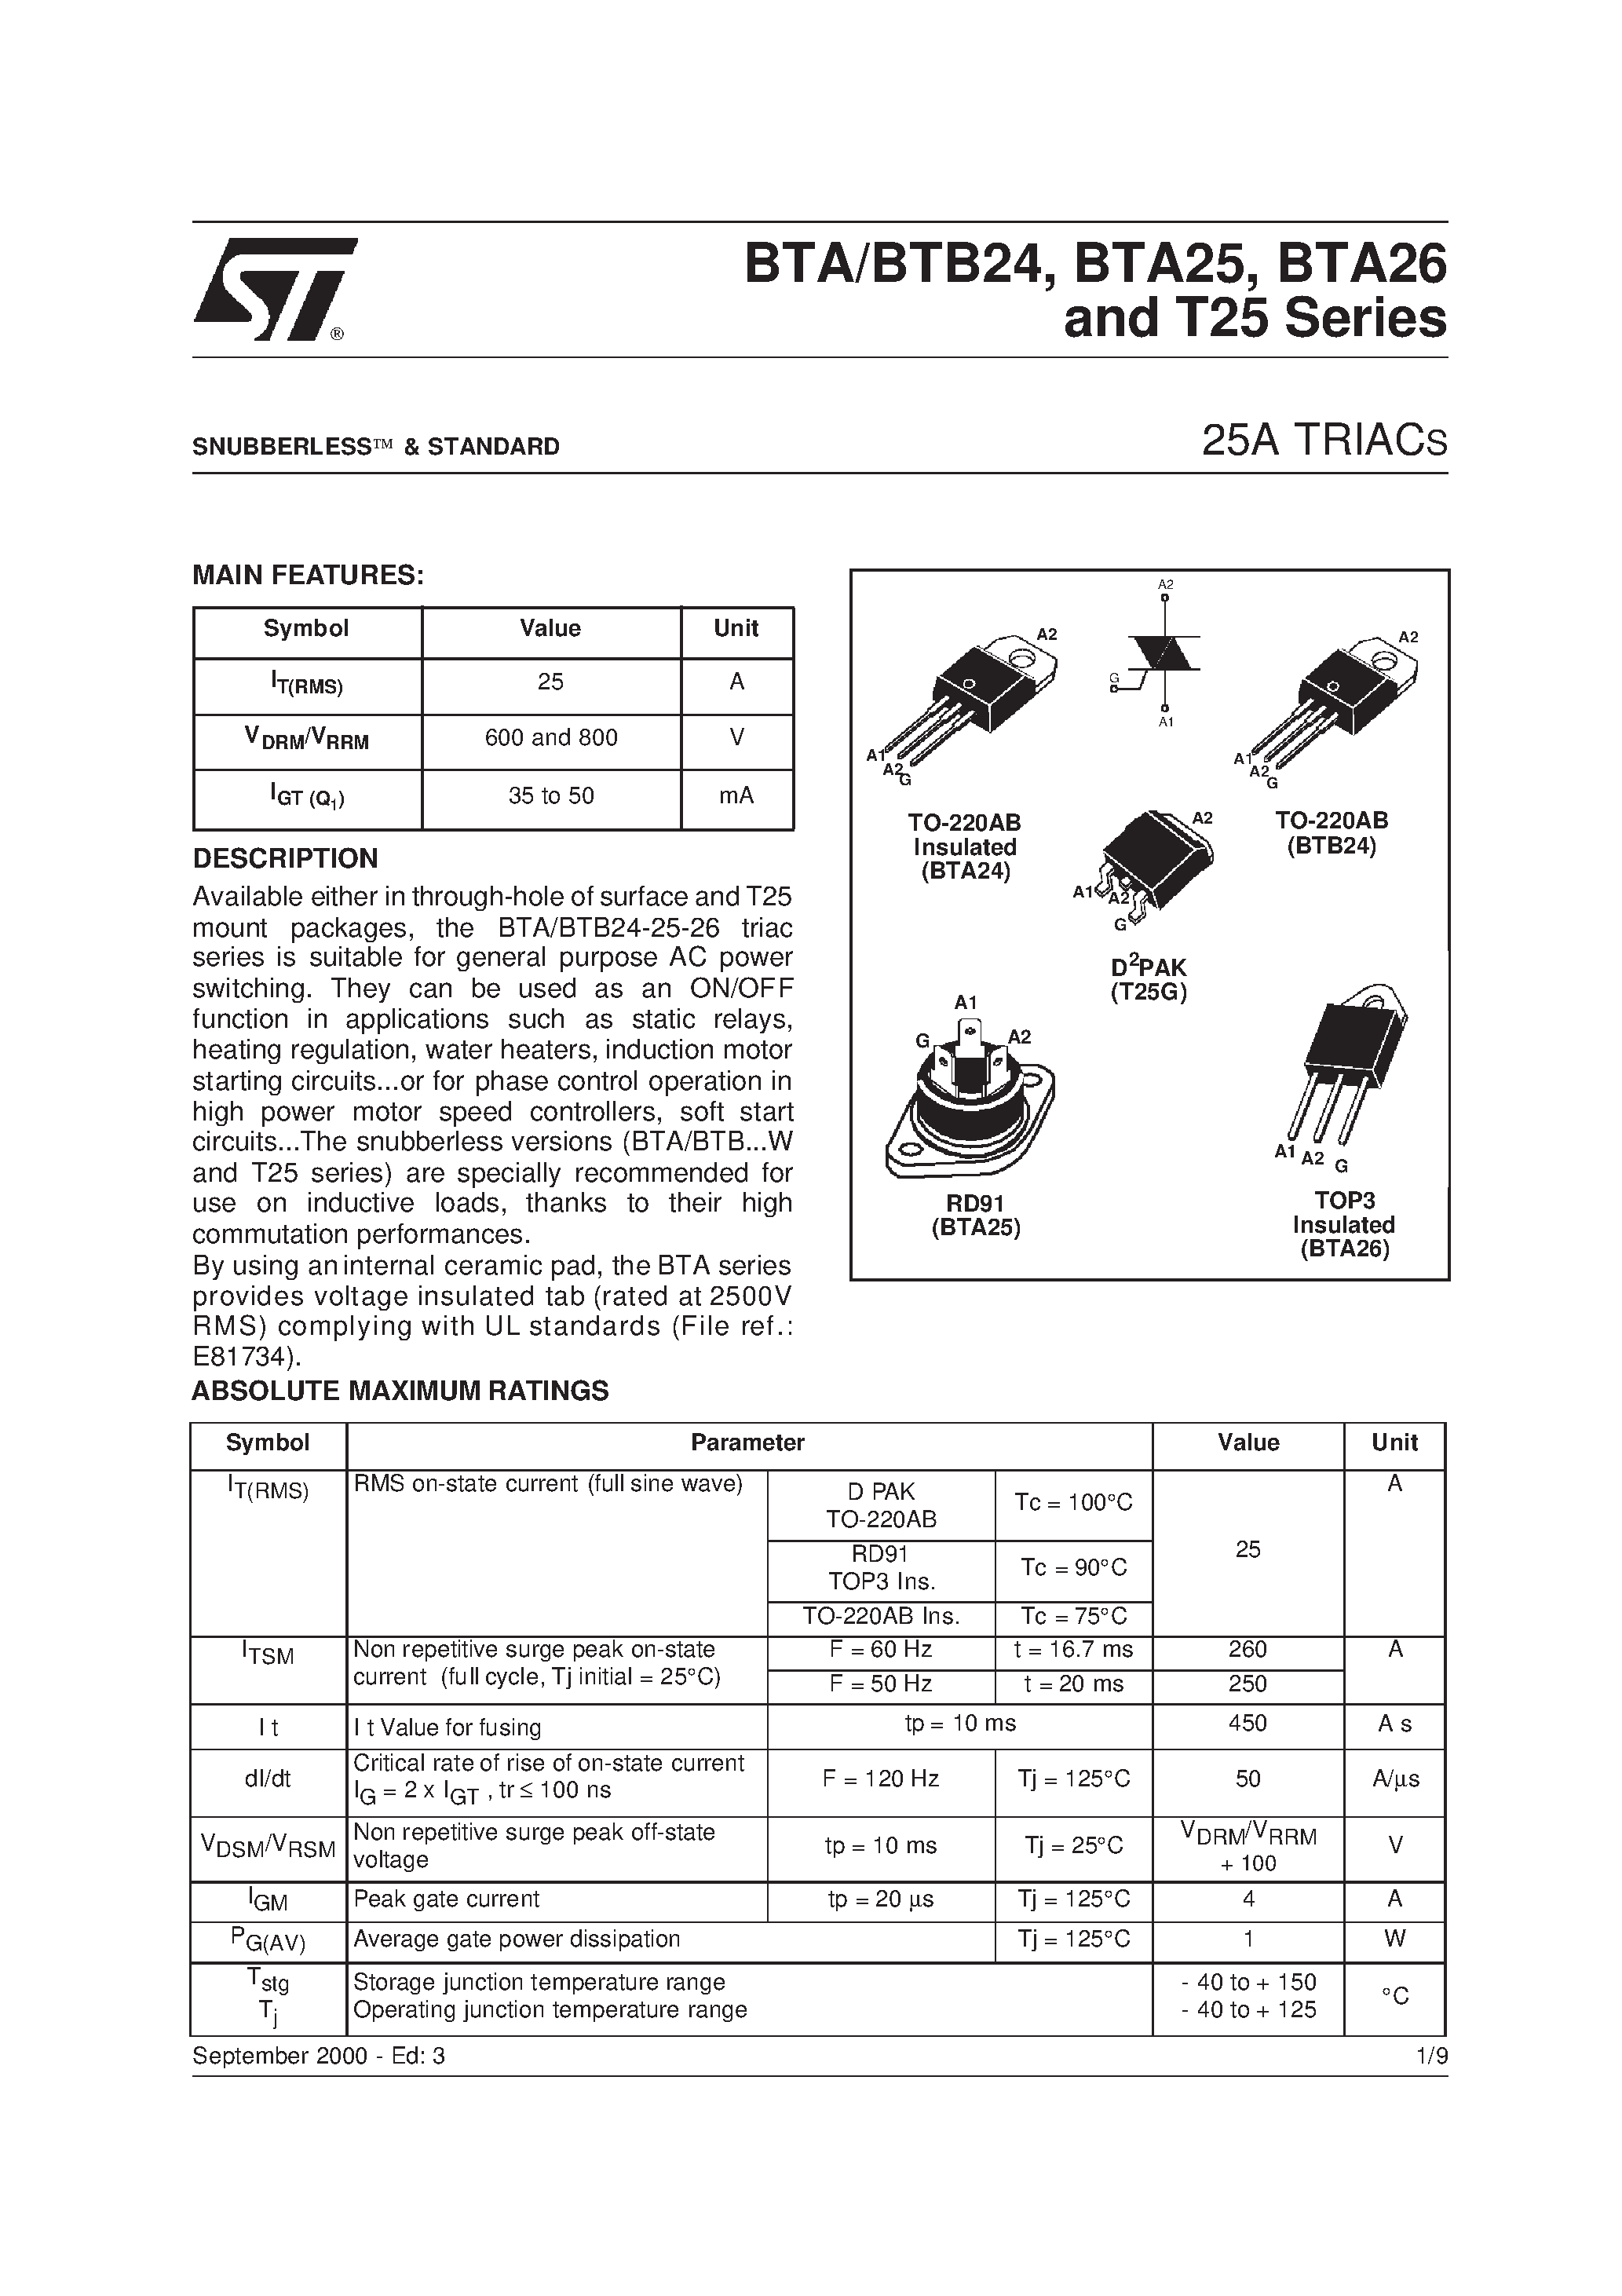 Datasheet BTA26-800BW - 25A TRIACS page 1